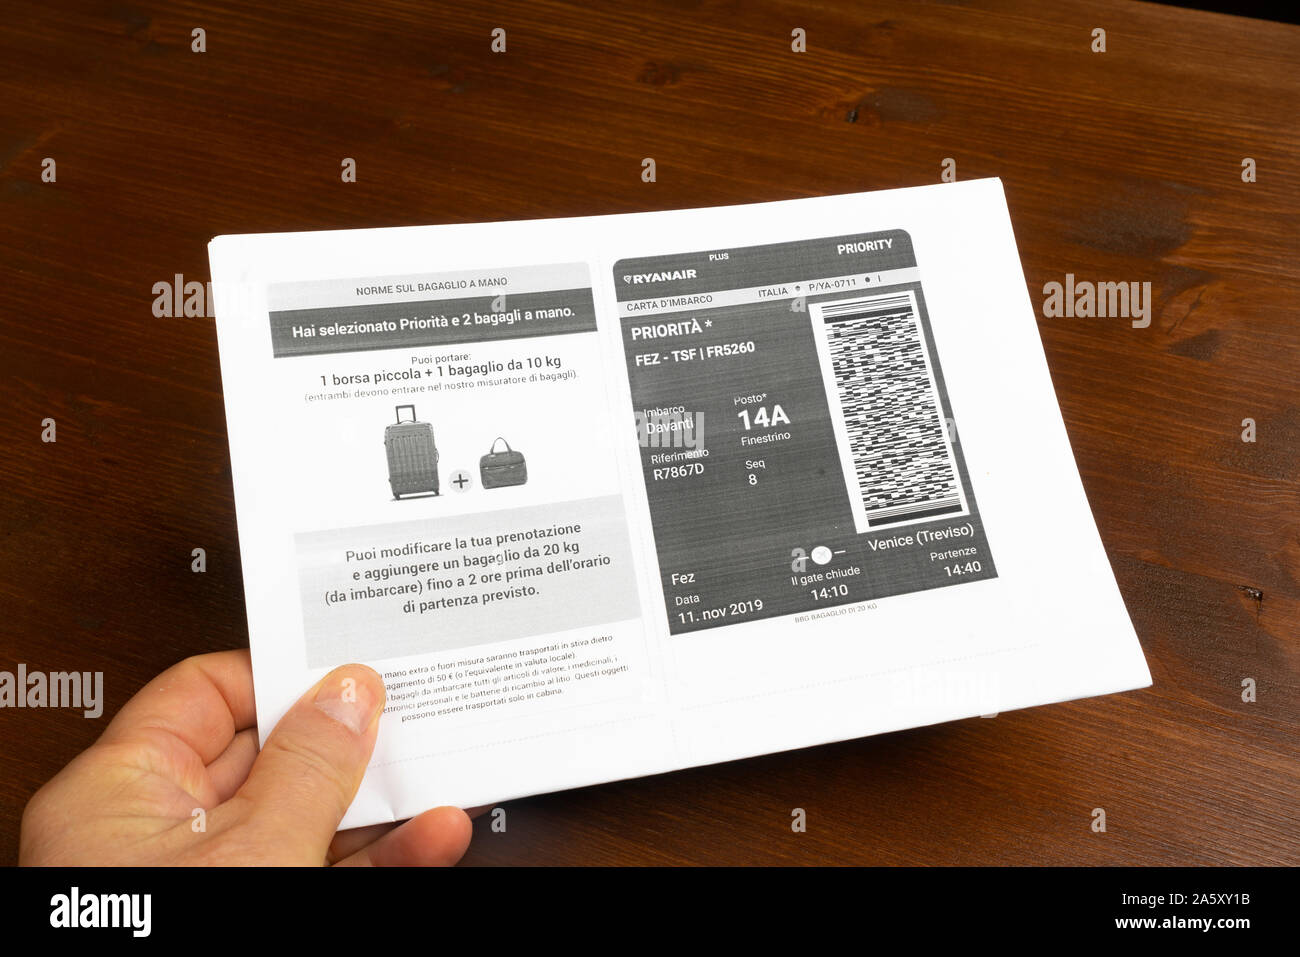 enkelt Bedøvelsesmiddel fortryde the boarding pass of the airline Ryanair and an italian passport Stock  Photo - Alamy